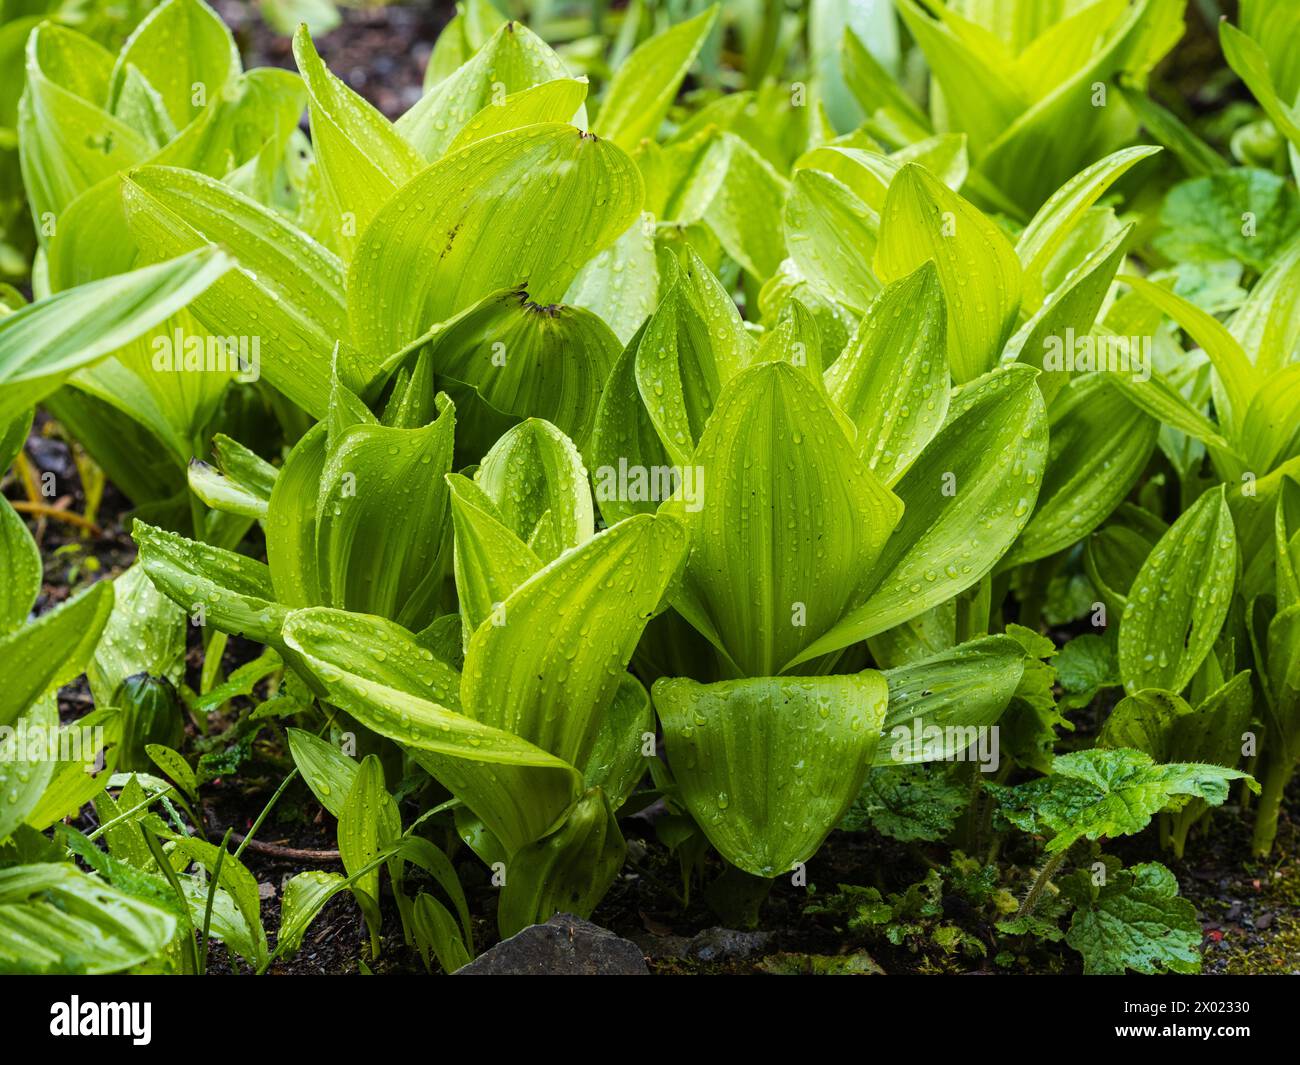 Pleated spring foliage of thehardy perennial false helleborine, Veratrum album var. flavum Stock Photo